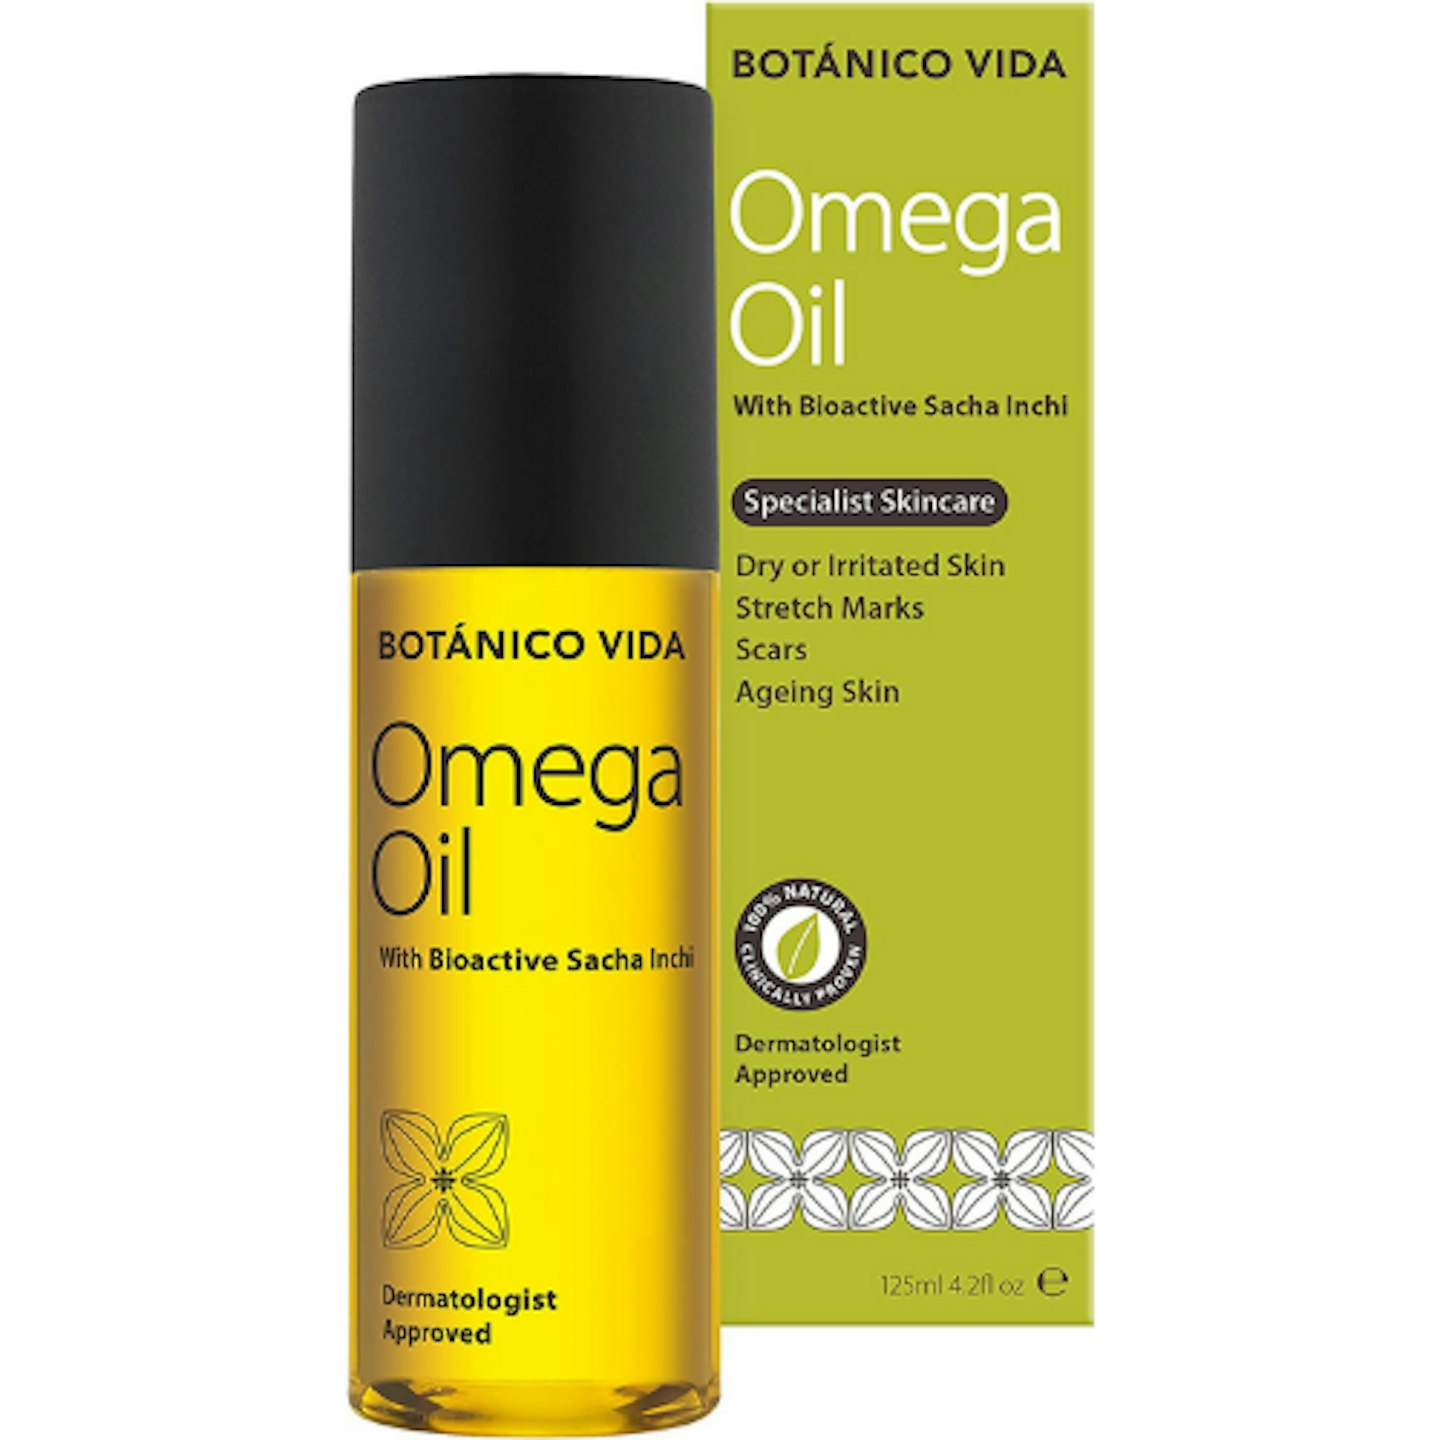 Botanico Vida Omega Oil